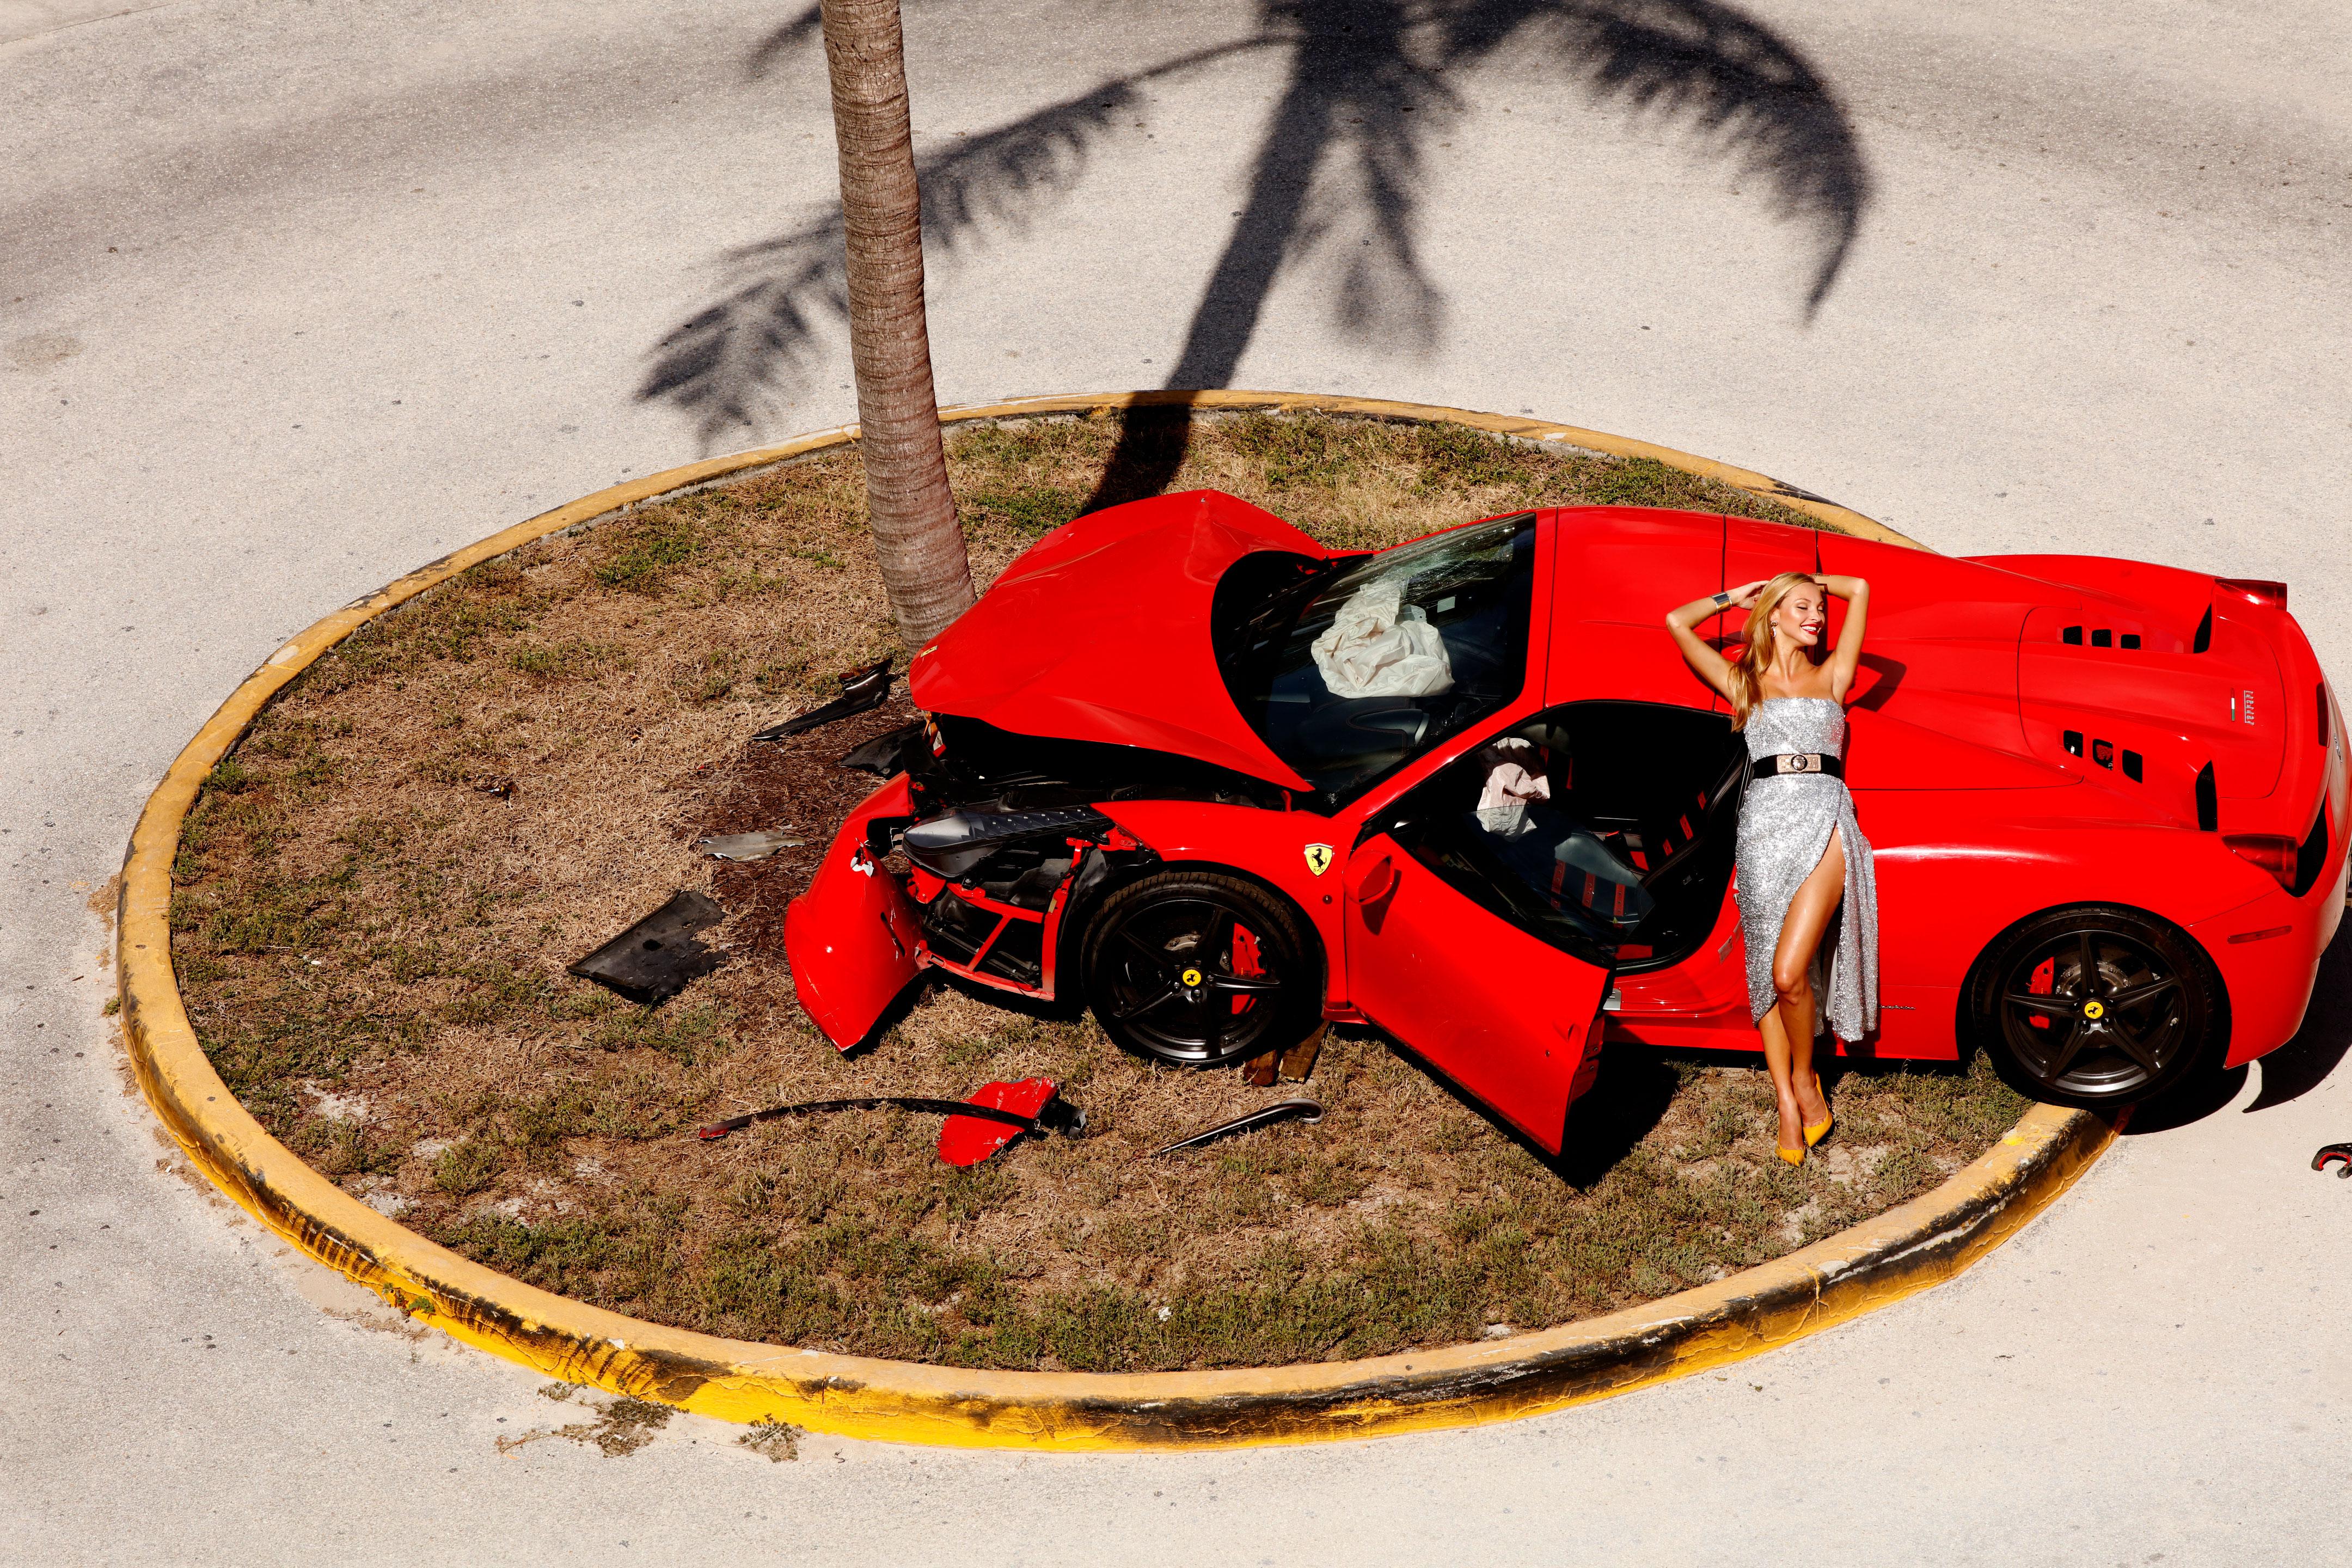 Miami Car Crash - Red Ferrari crashed on a Palmtree, fine art photography, 2019